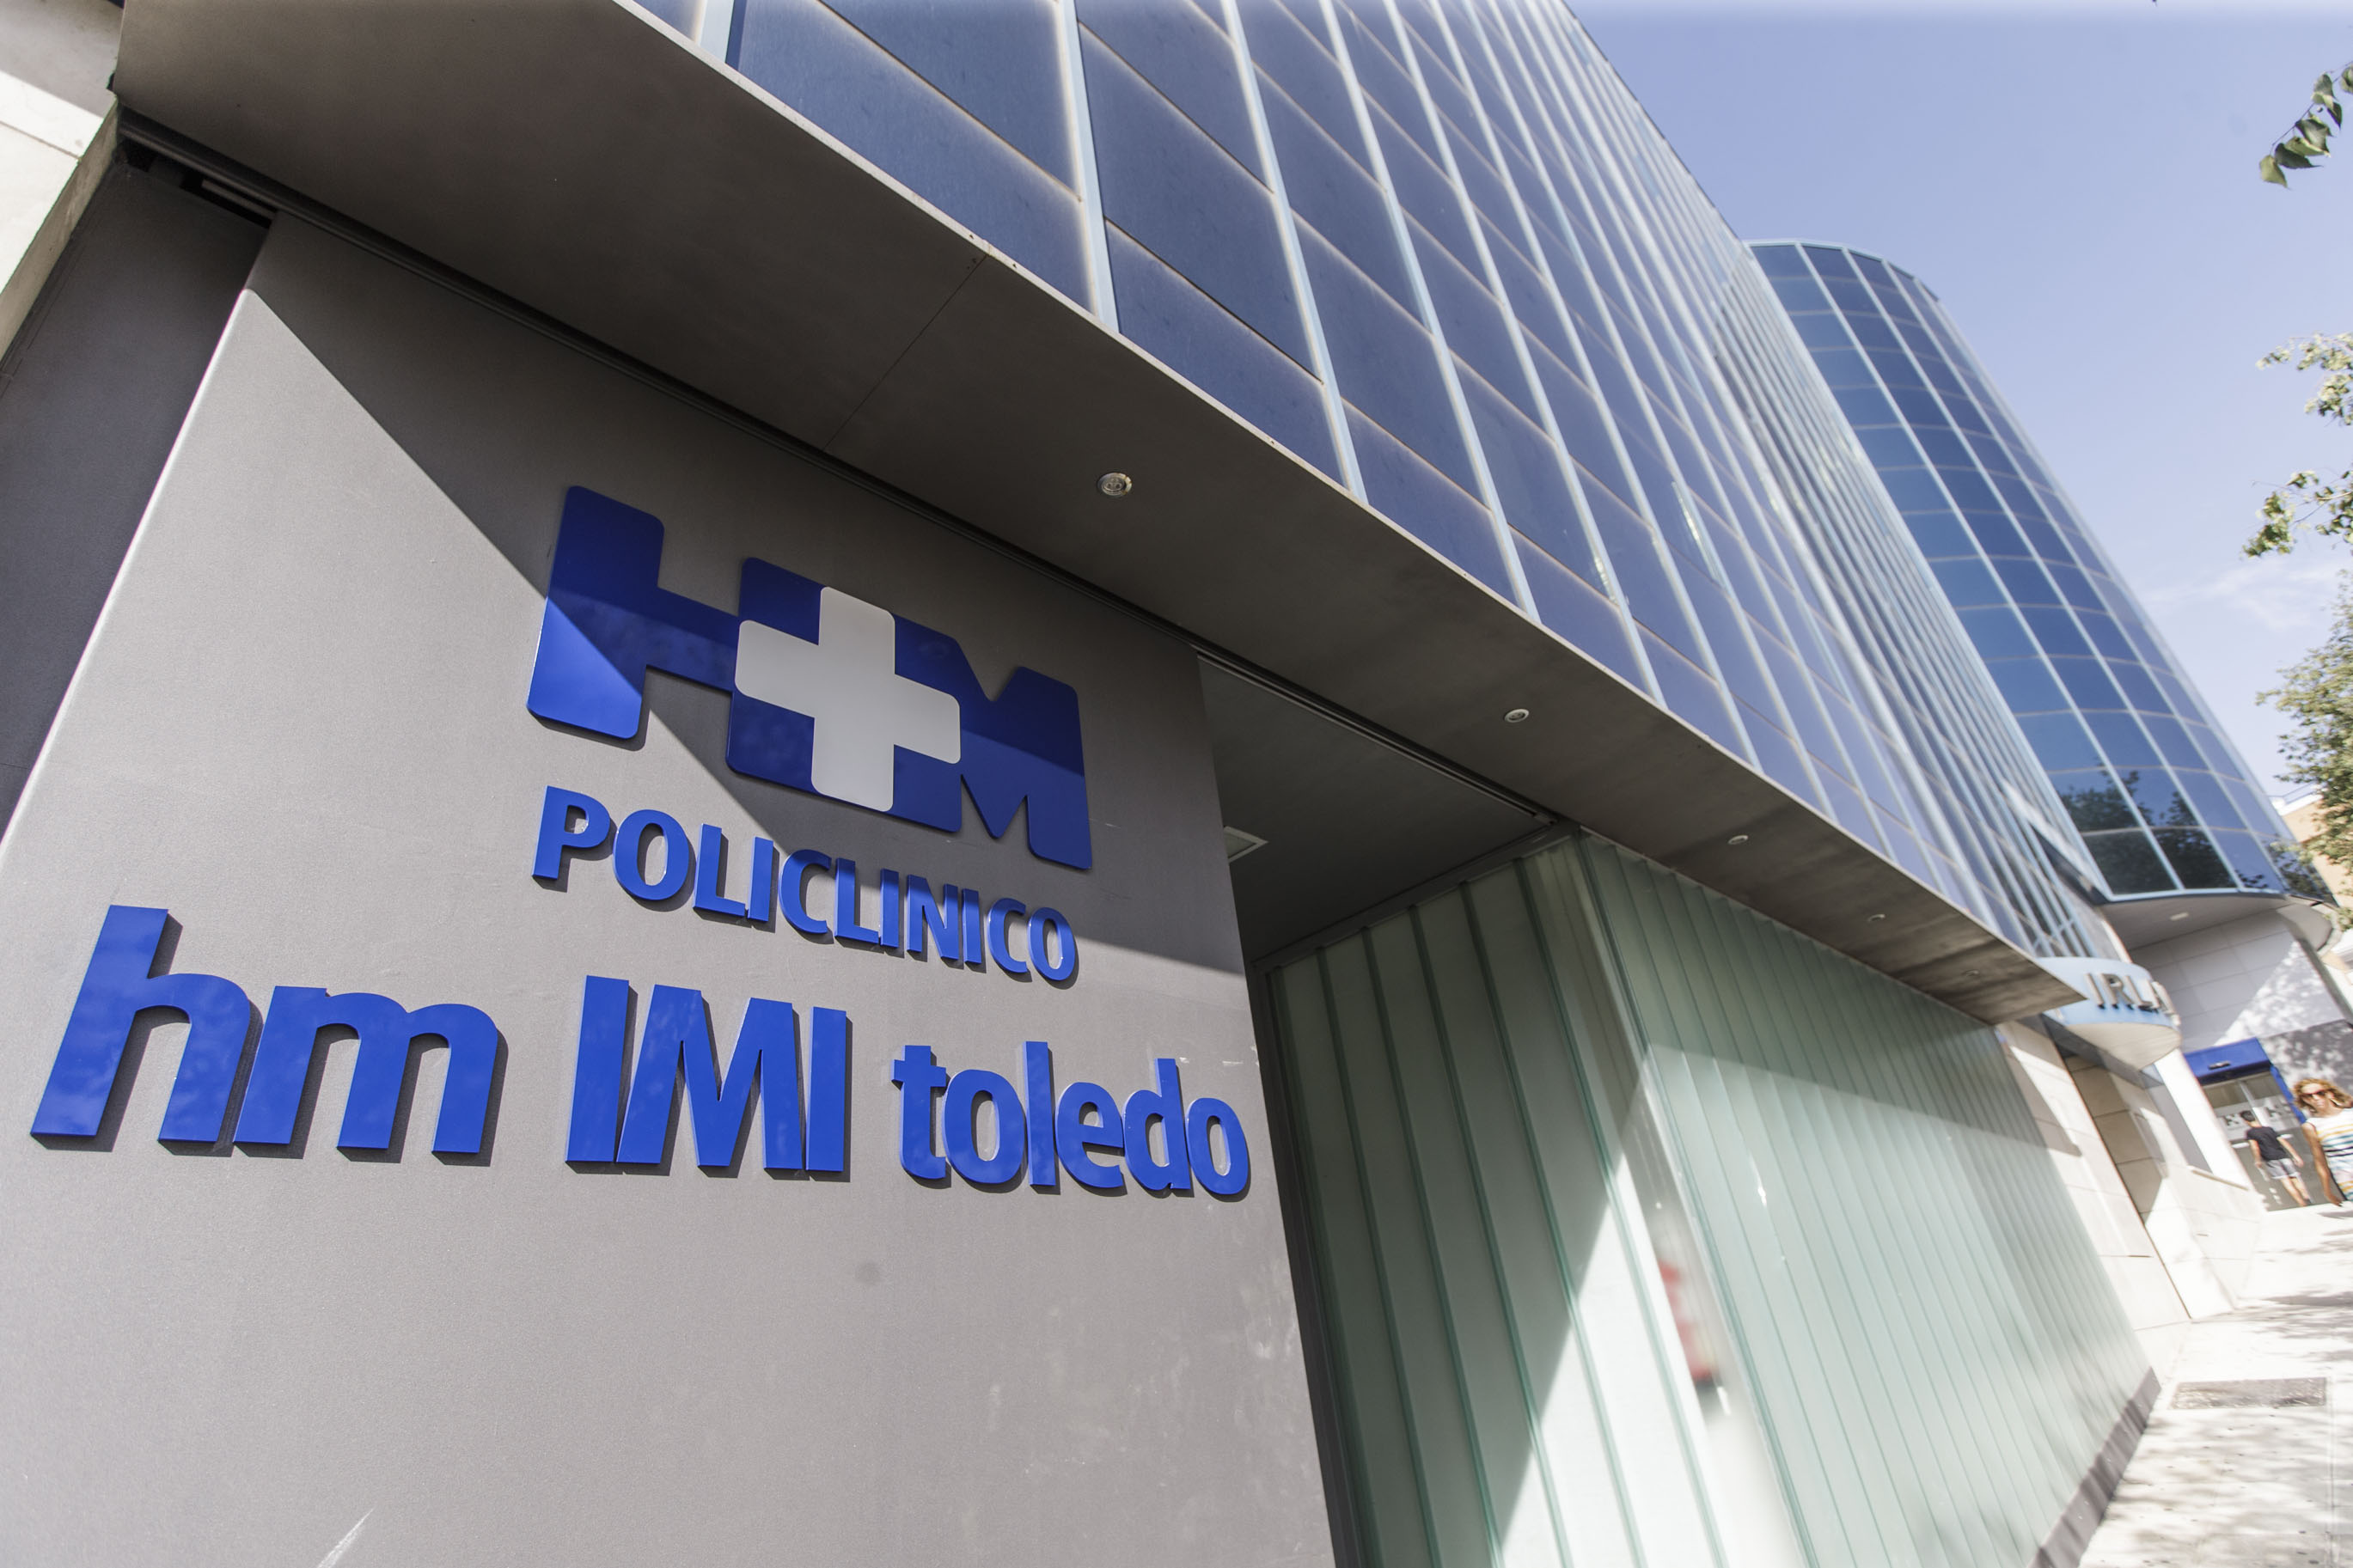 Policlínico HM IMI Toledo